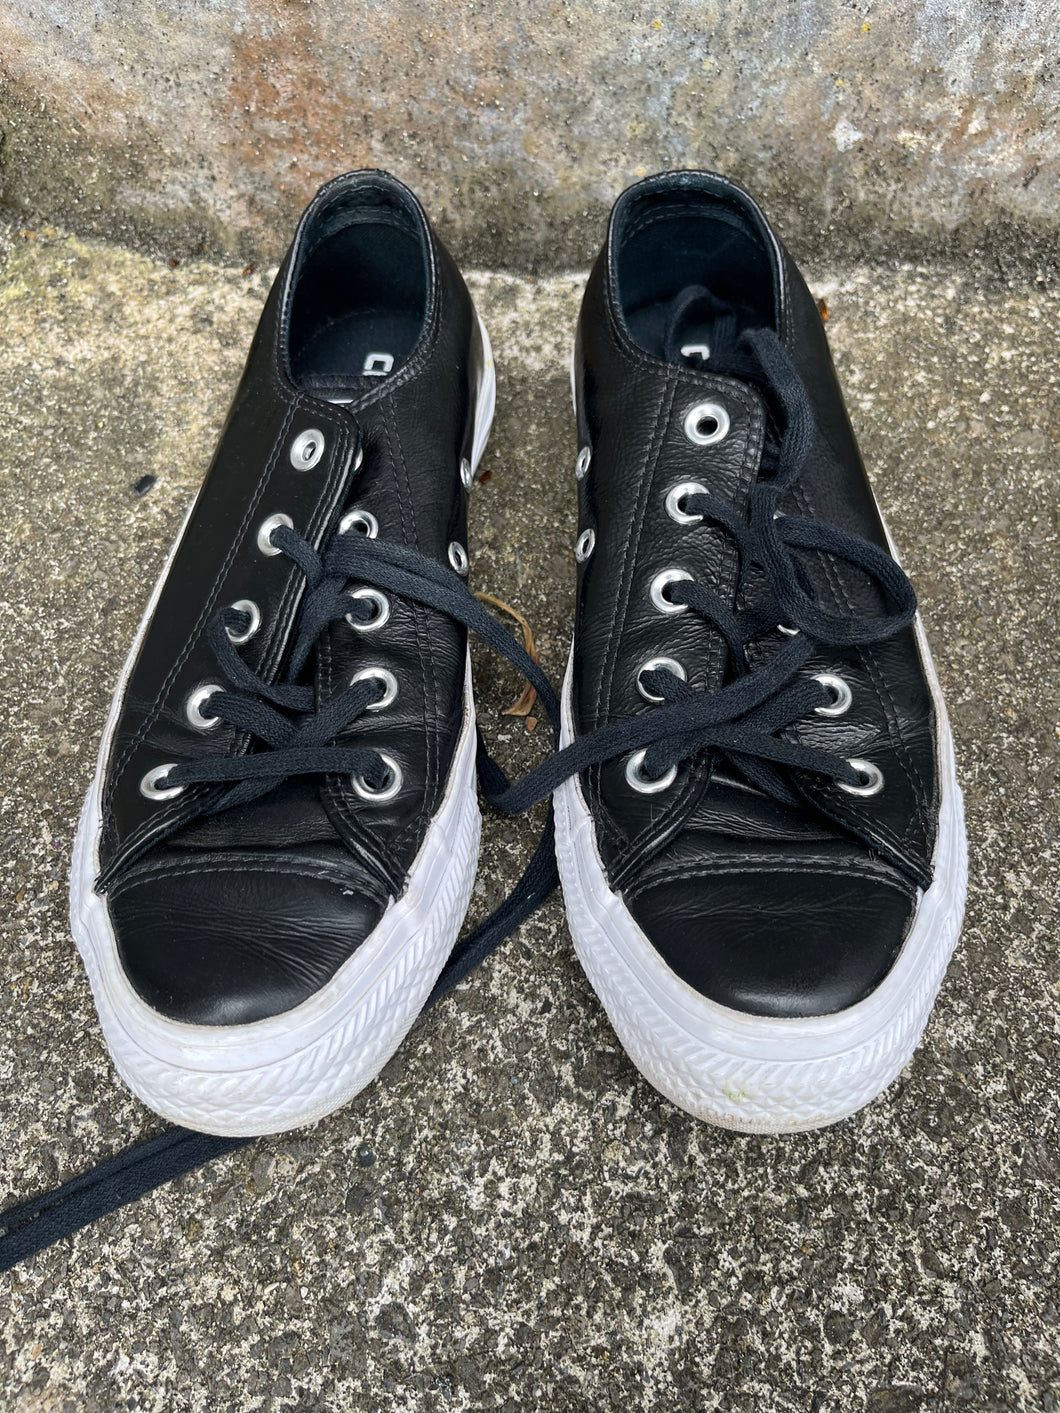 Black leather converse   uk 3.5 (eu 36.5)